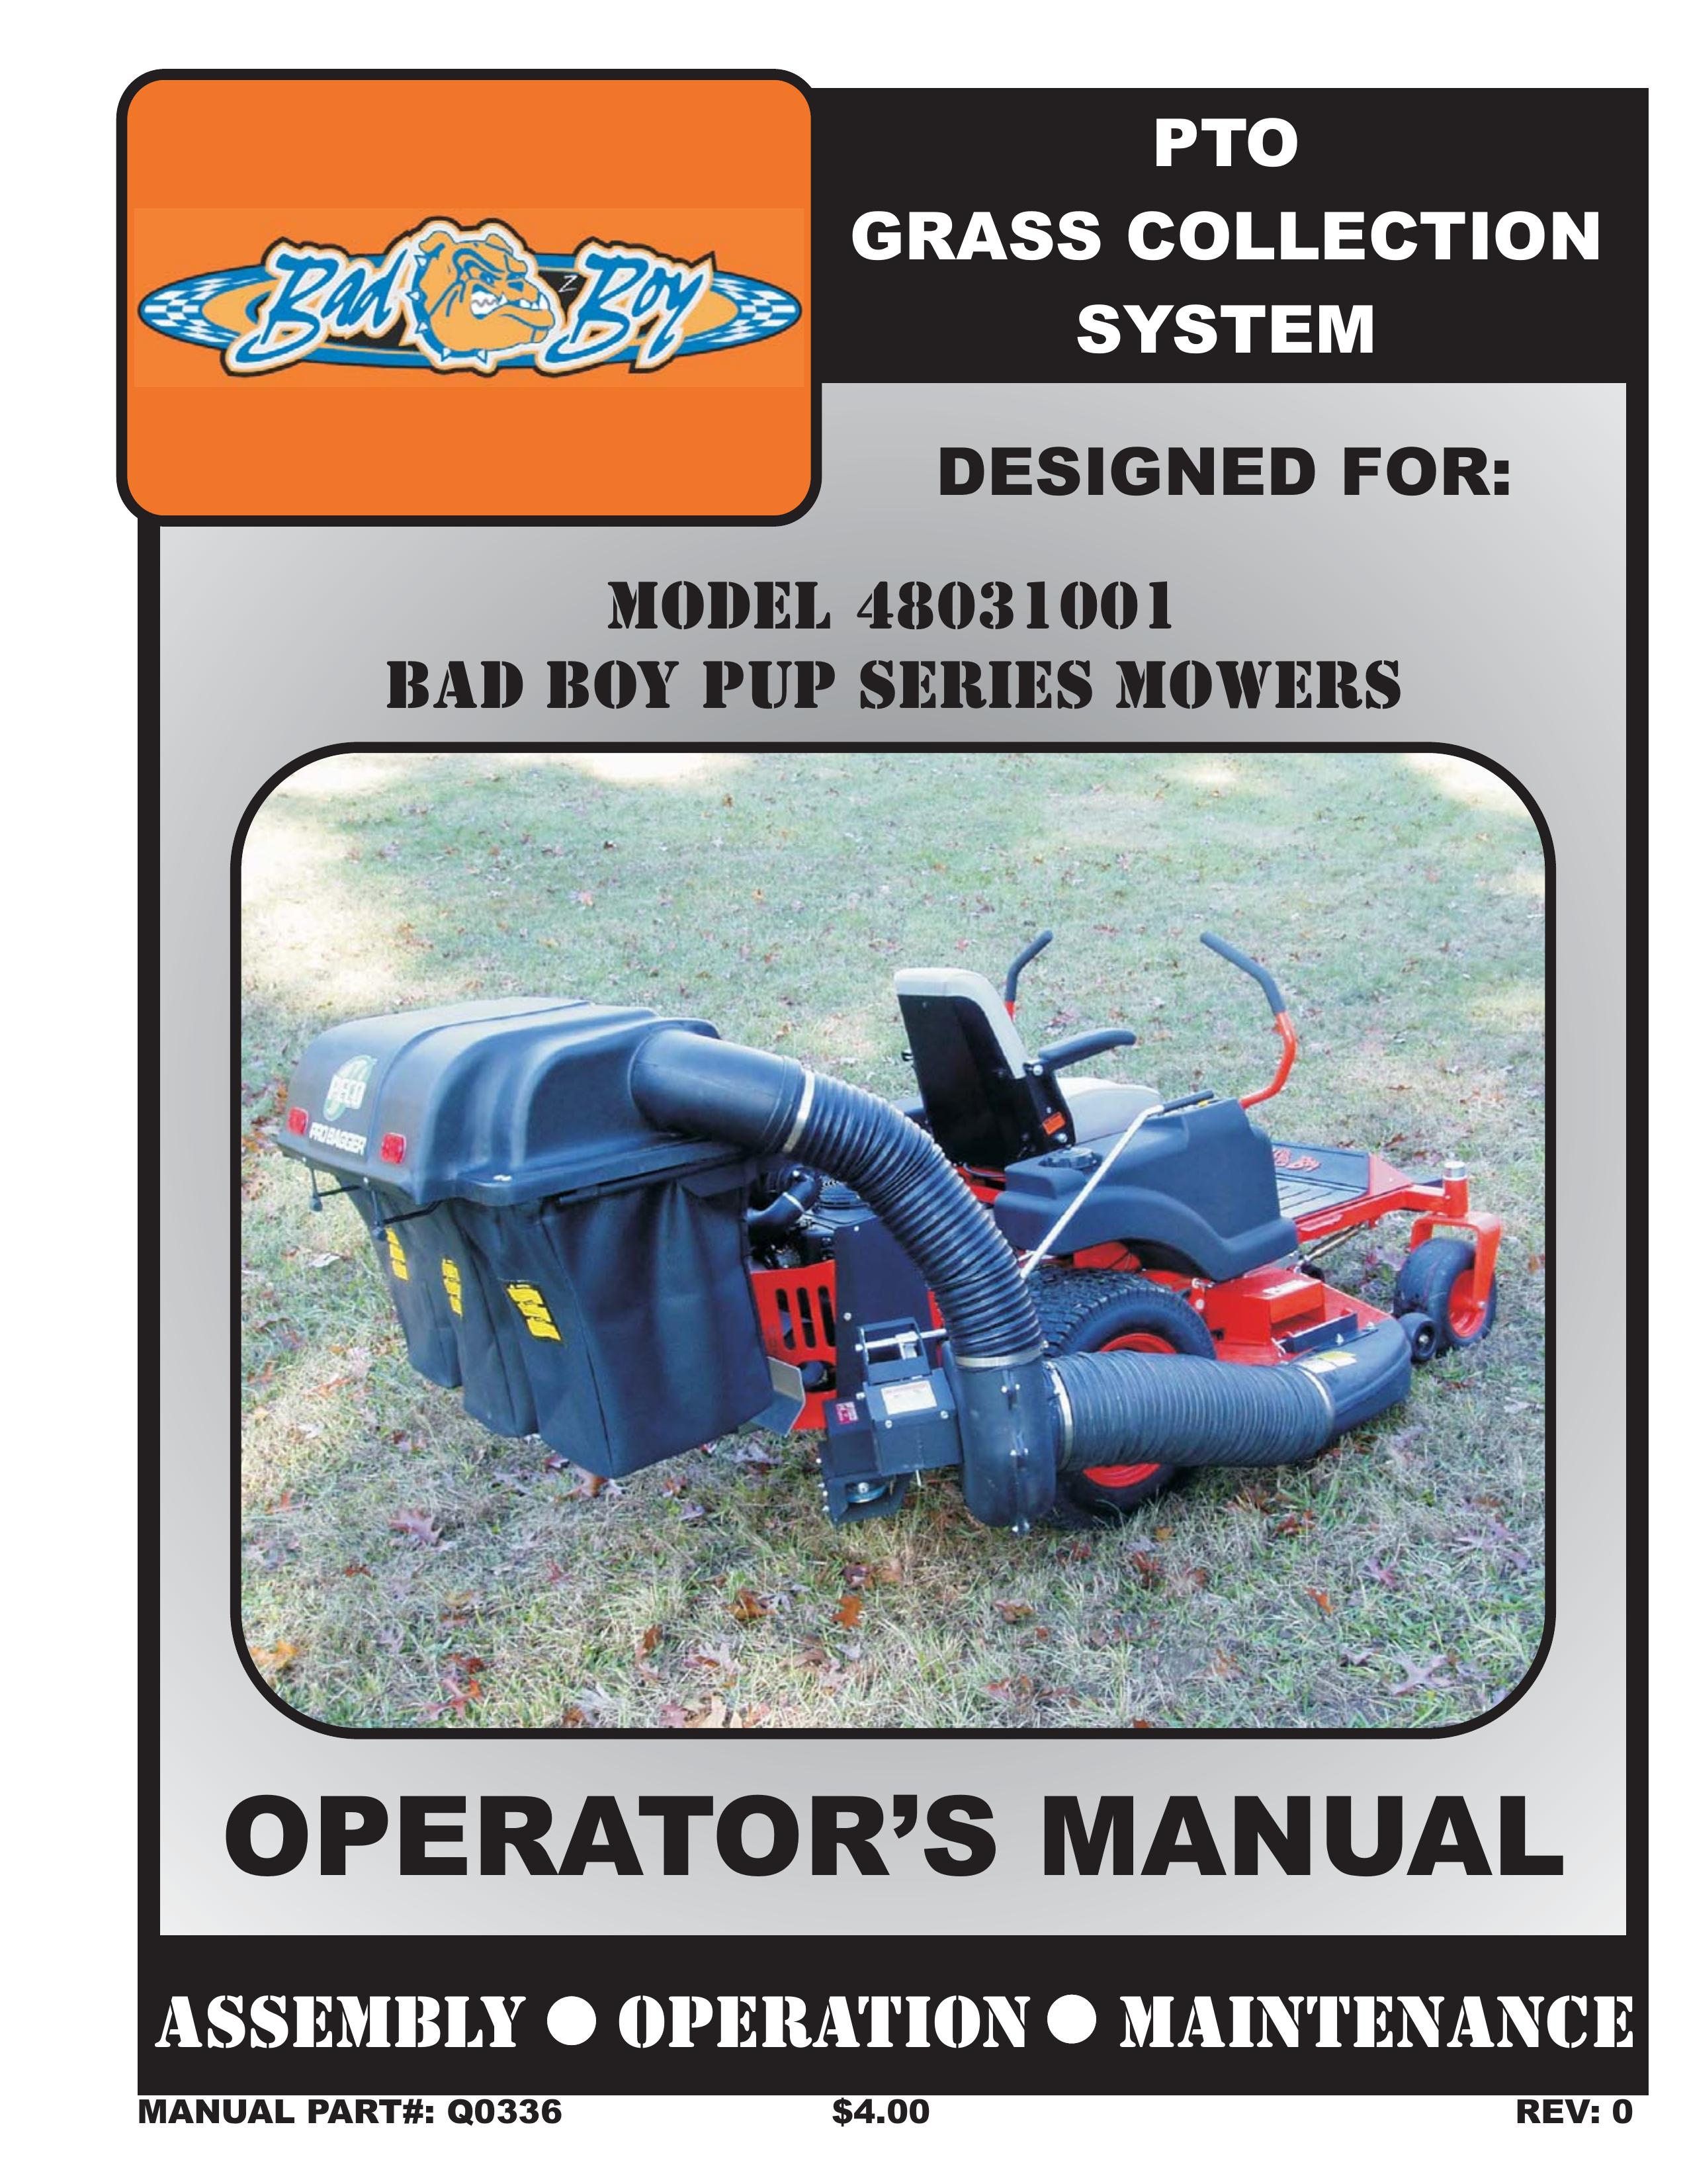 Bad Boy Mowers PUP Series Lawn Mower User Manual